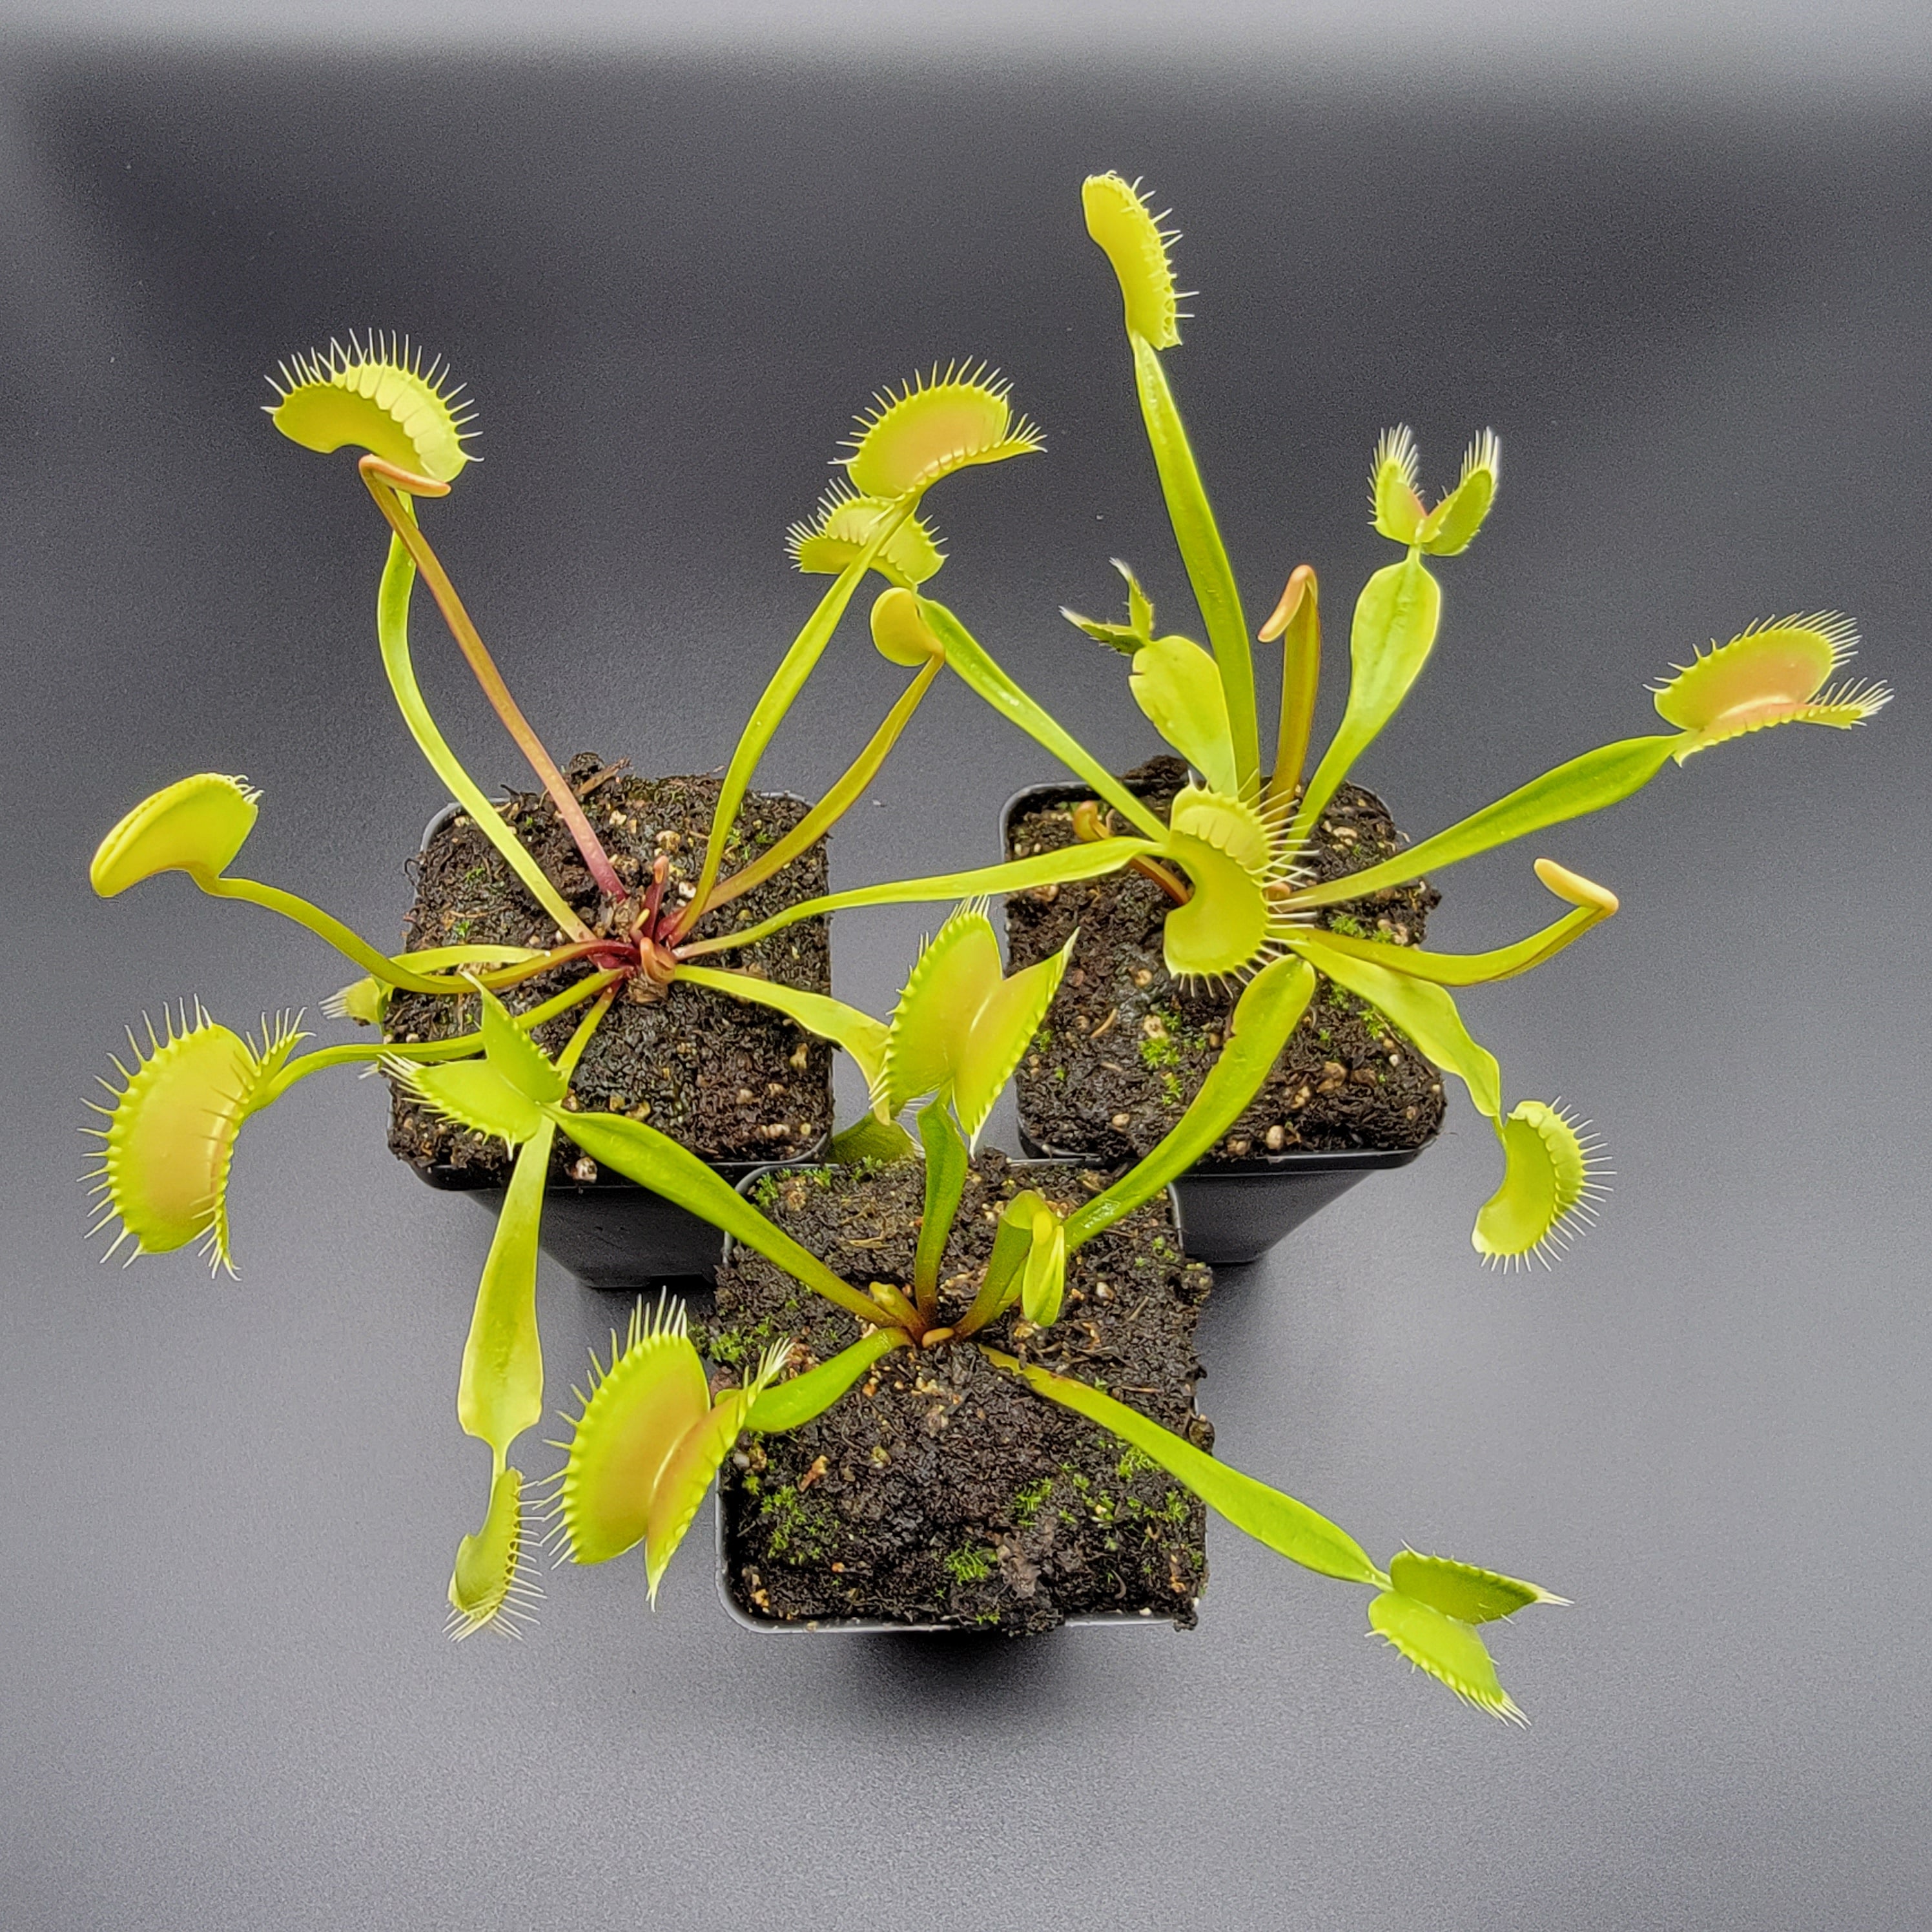 Venus flytrap (Dionaea muscipula) 'B52' x 'Ginormous' - Rainbow Carnivorous Plants LLC